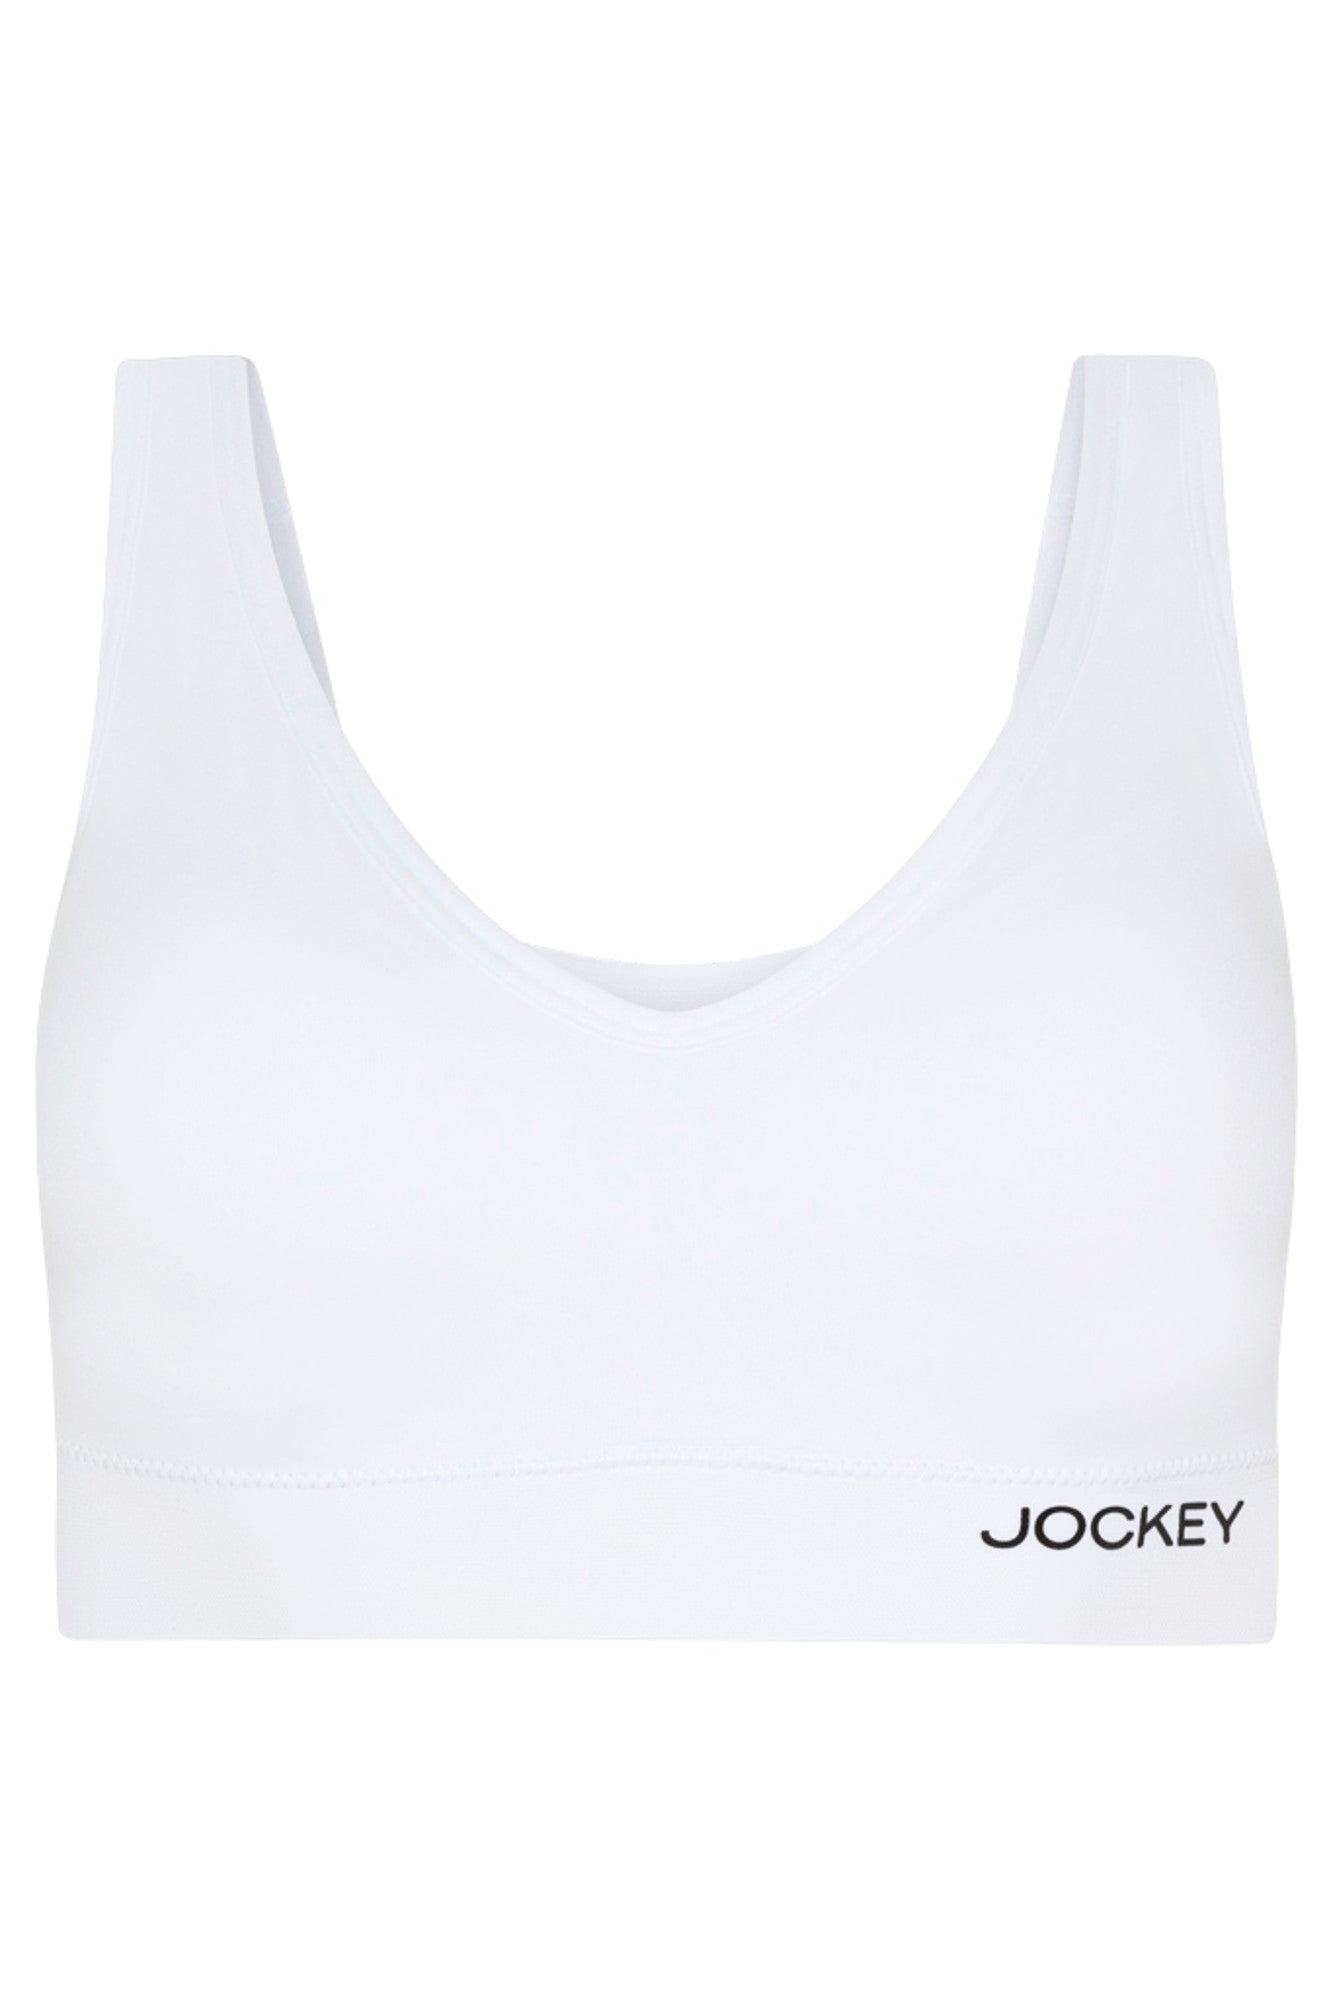 Jockey Cami Strap Beginners Bra - White #100 / S